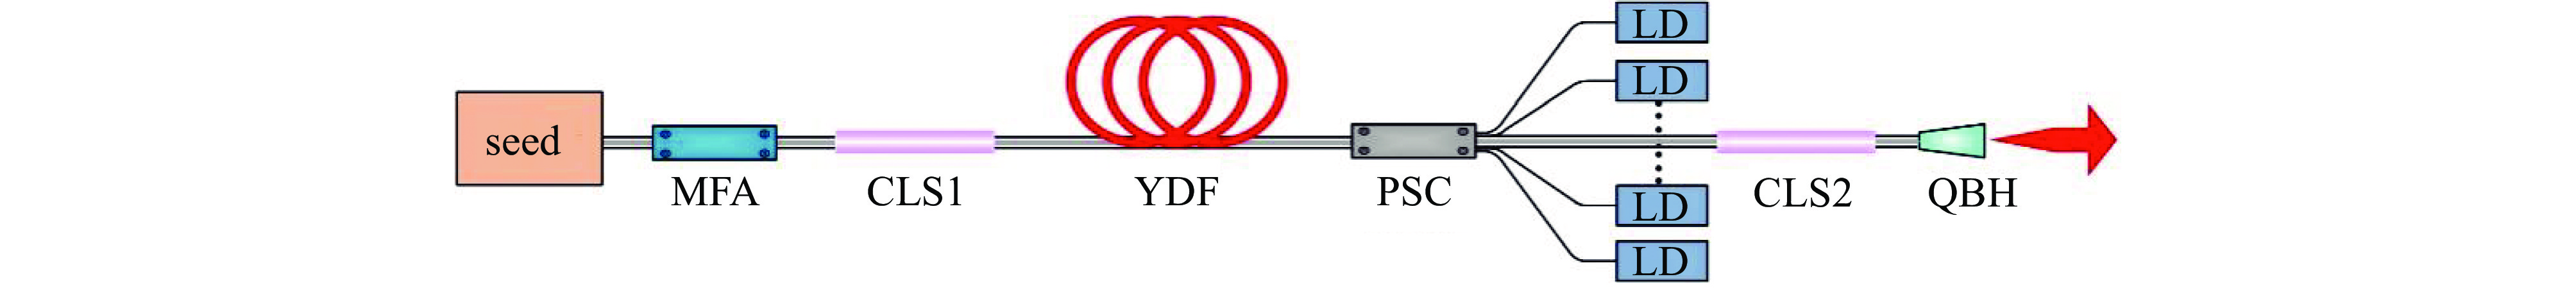 Schematic diagram of the LD pumped 13 kW fiber laser amplifier